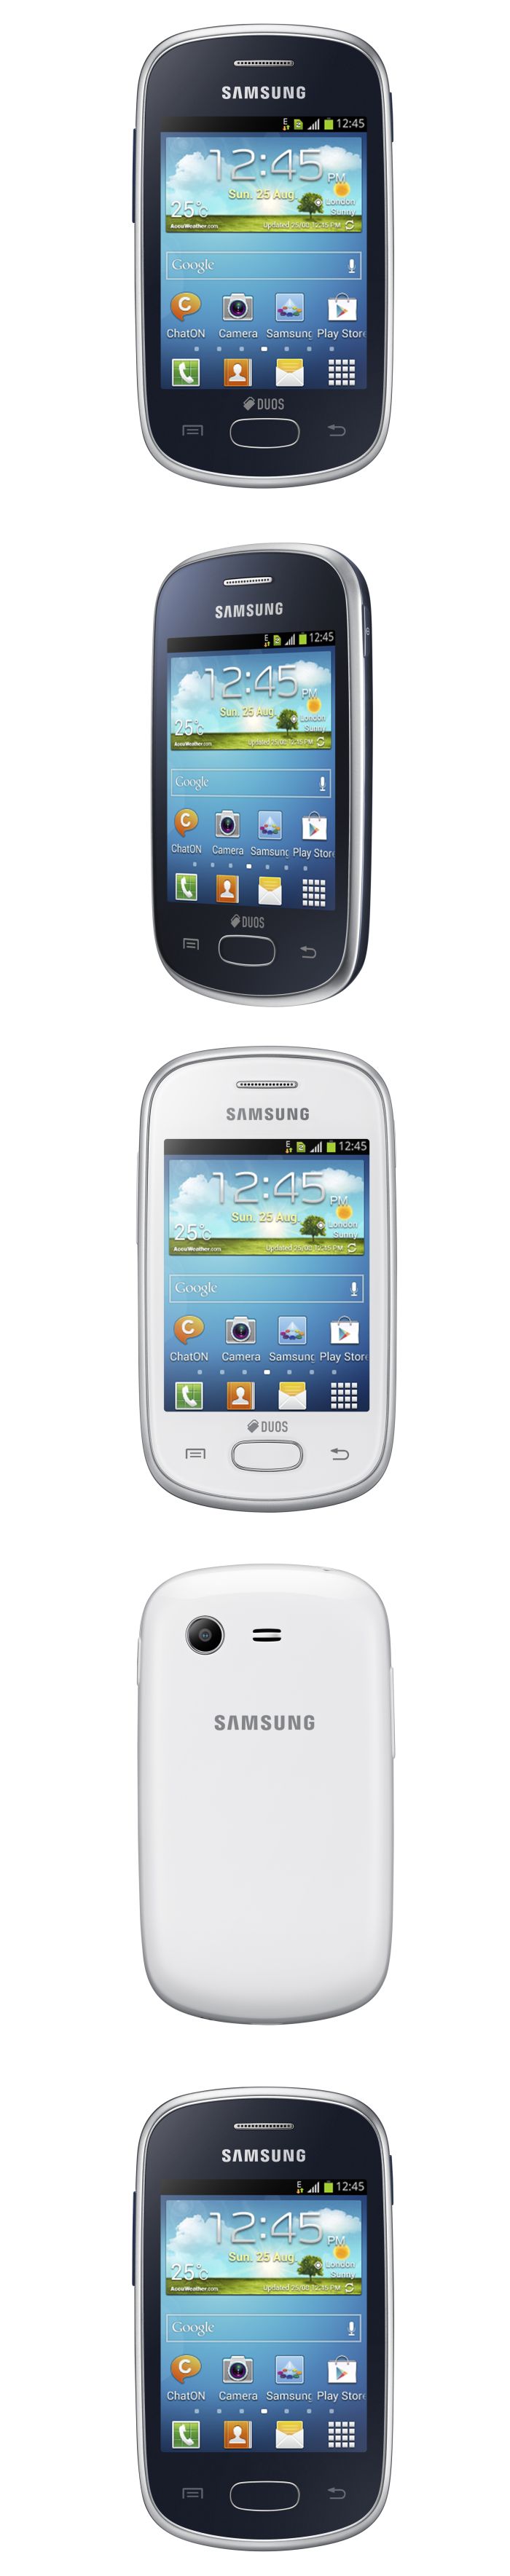 Filléres Samsung okostelefonok érkeznek